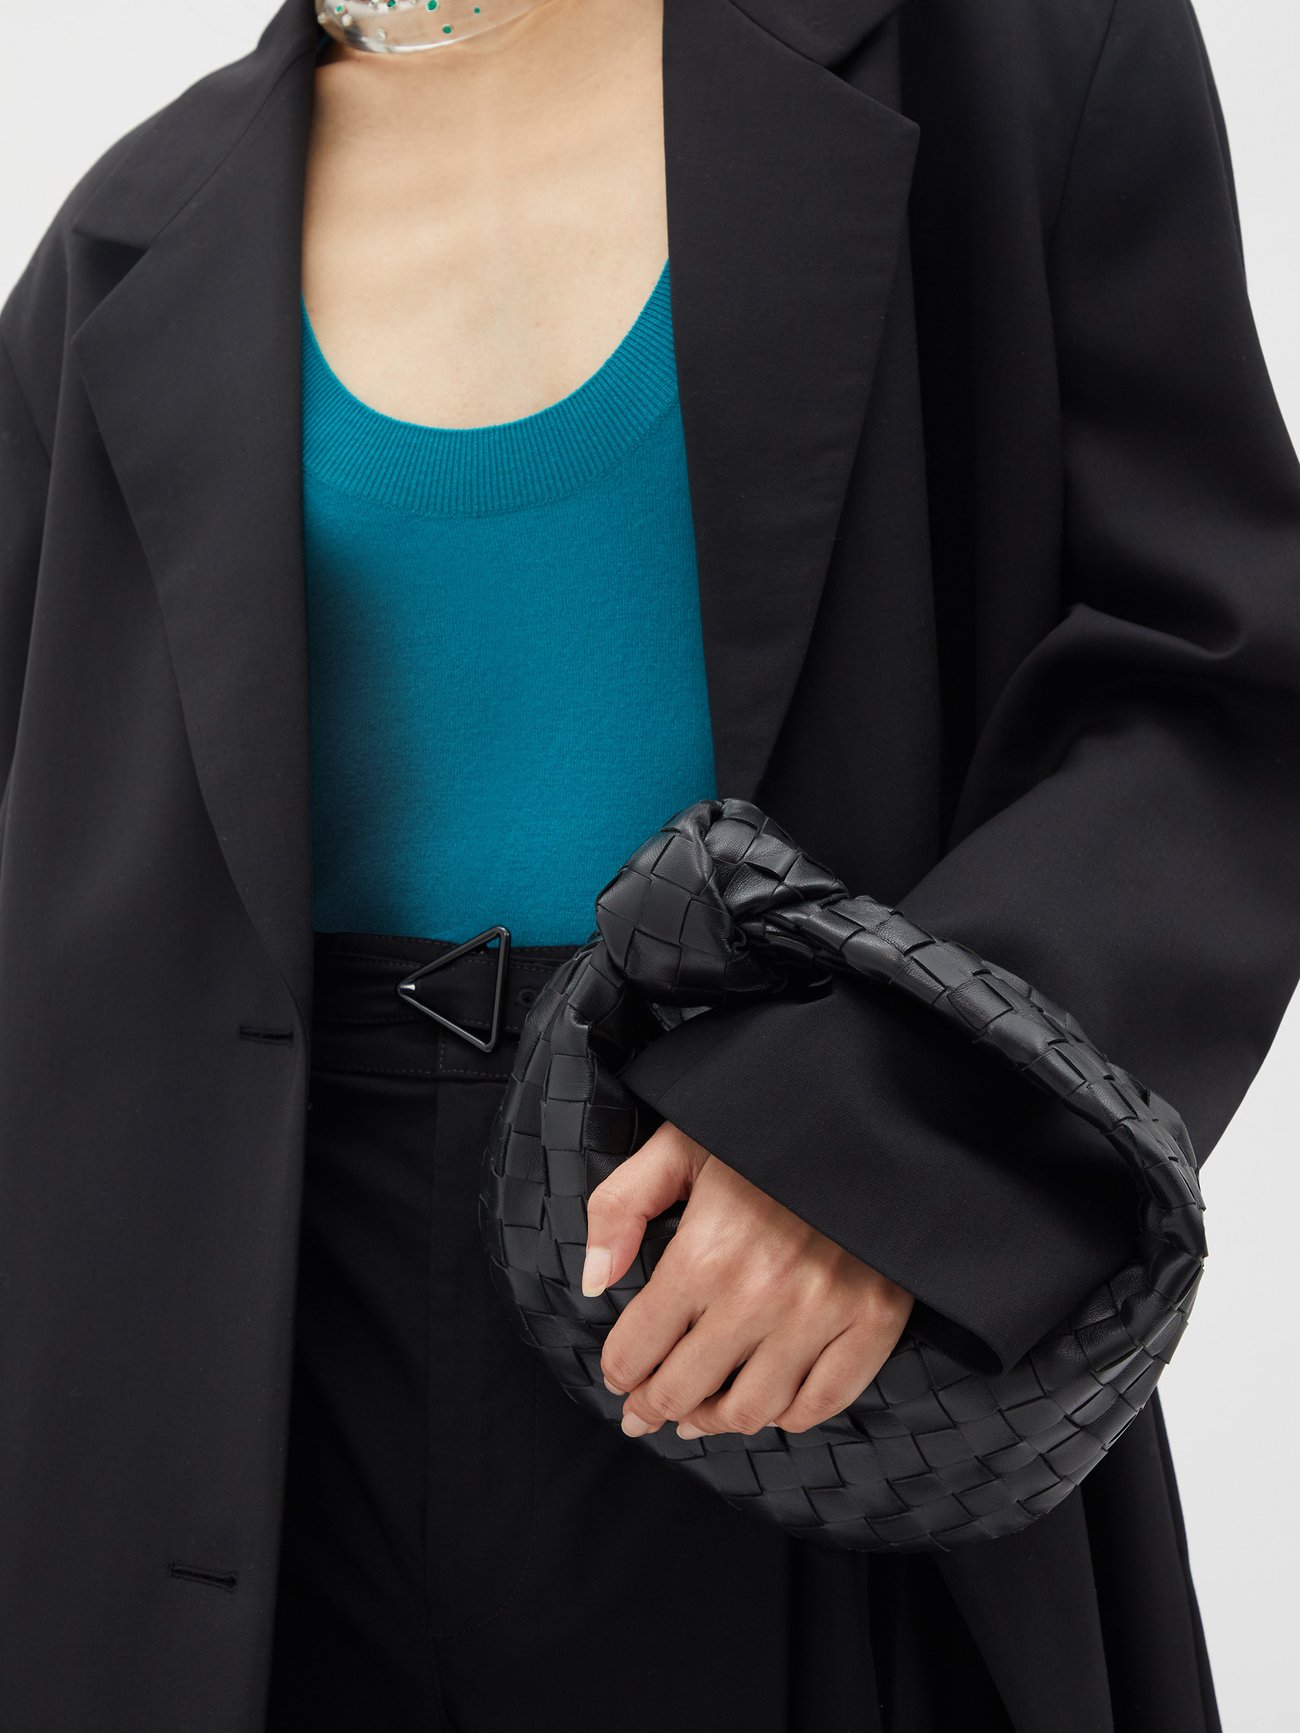 Bottega Veneta Jodie Intreccio Weave Leather Shoulder Bag